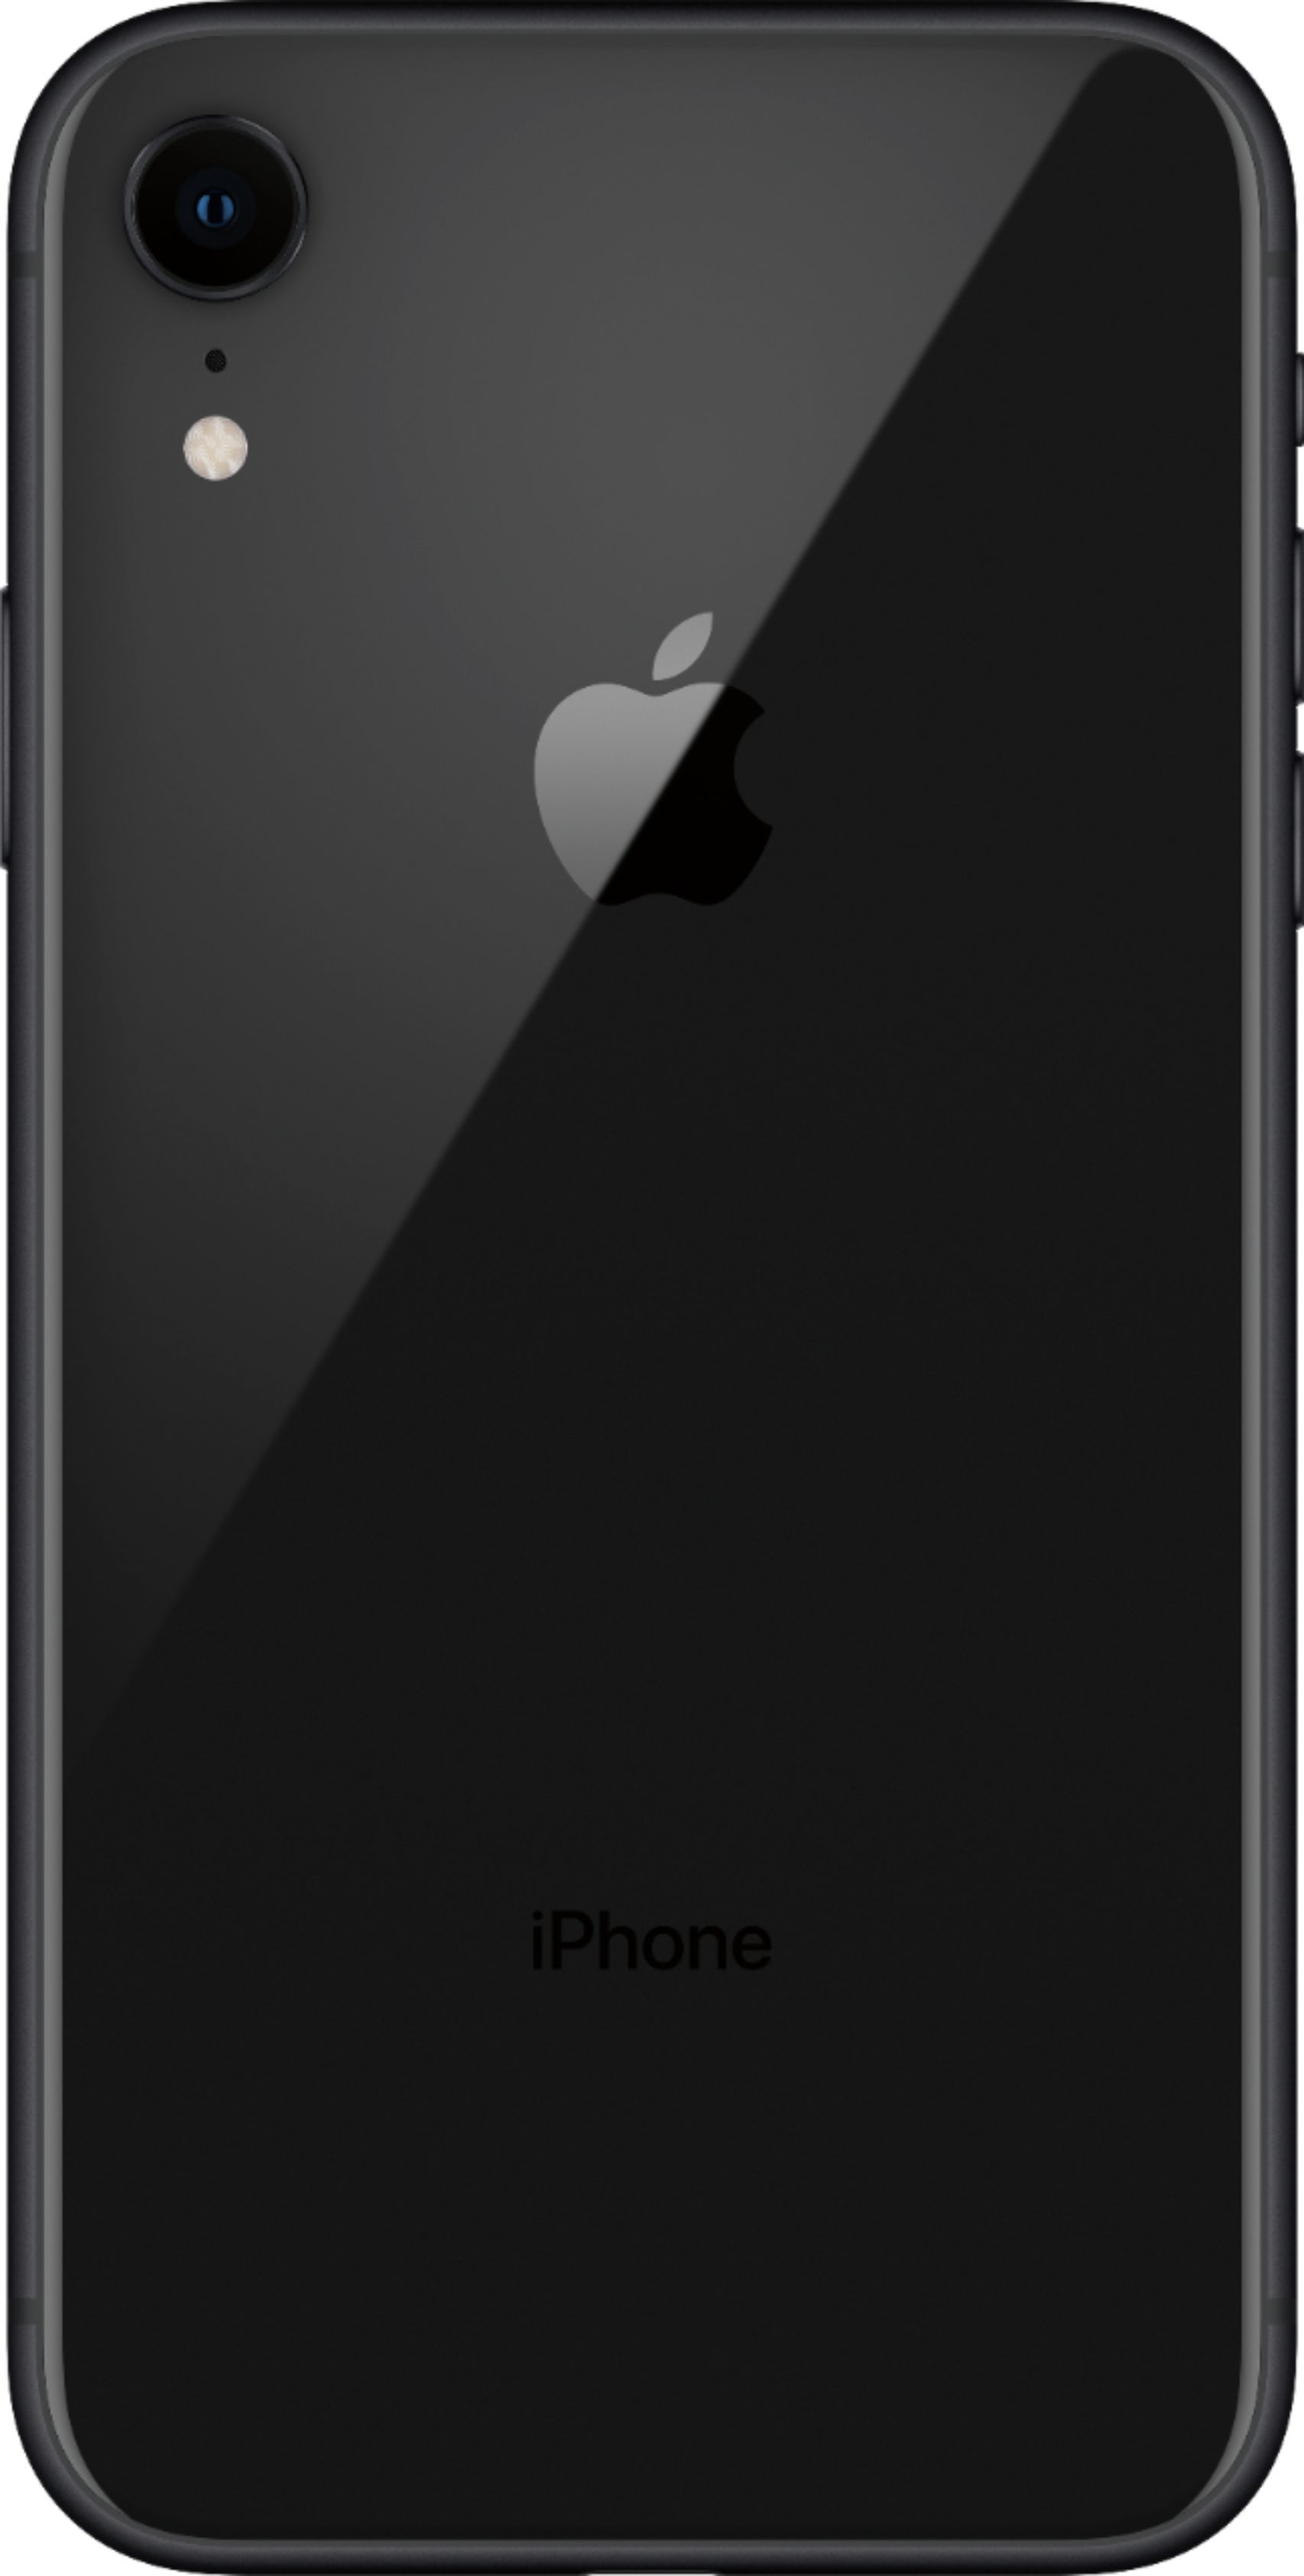 Back View: Open Box Apple iPhone 12 Pro 256 GB Smartphone, 6.7" OLED 2778 x 1284, Hexa-core (6 Core), 6 GB RAM, iOS 14, 5G, Silver